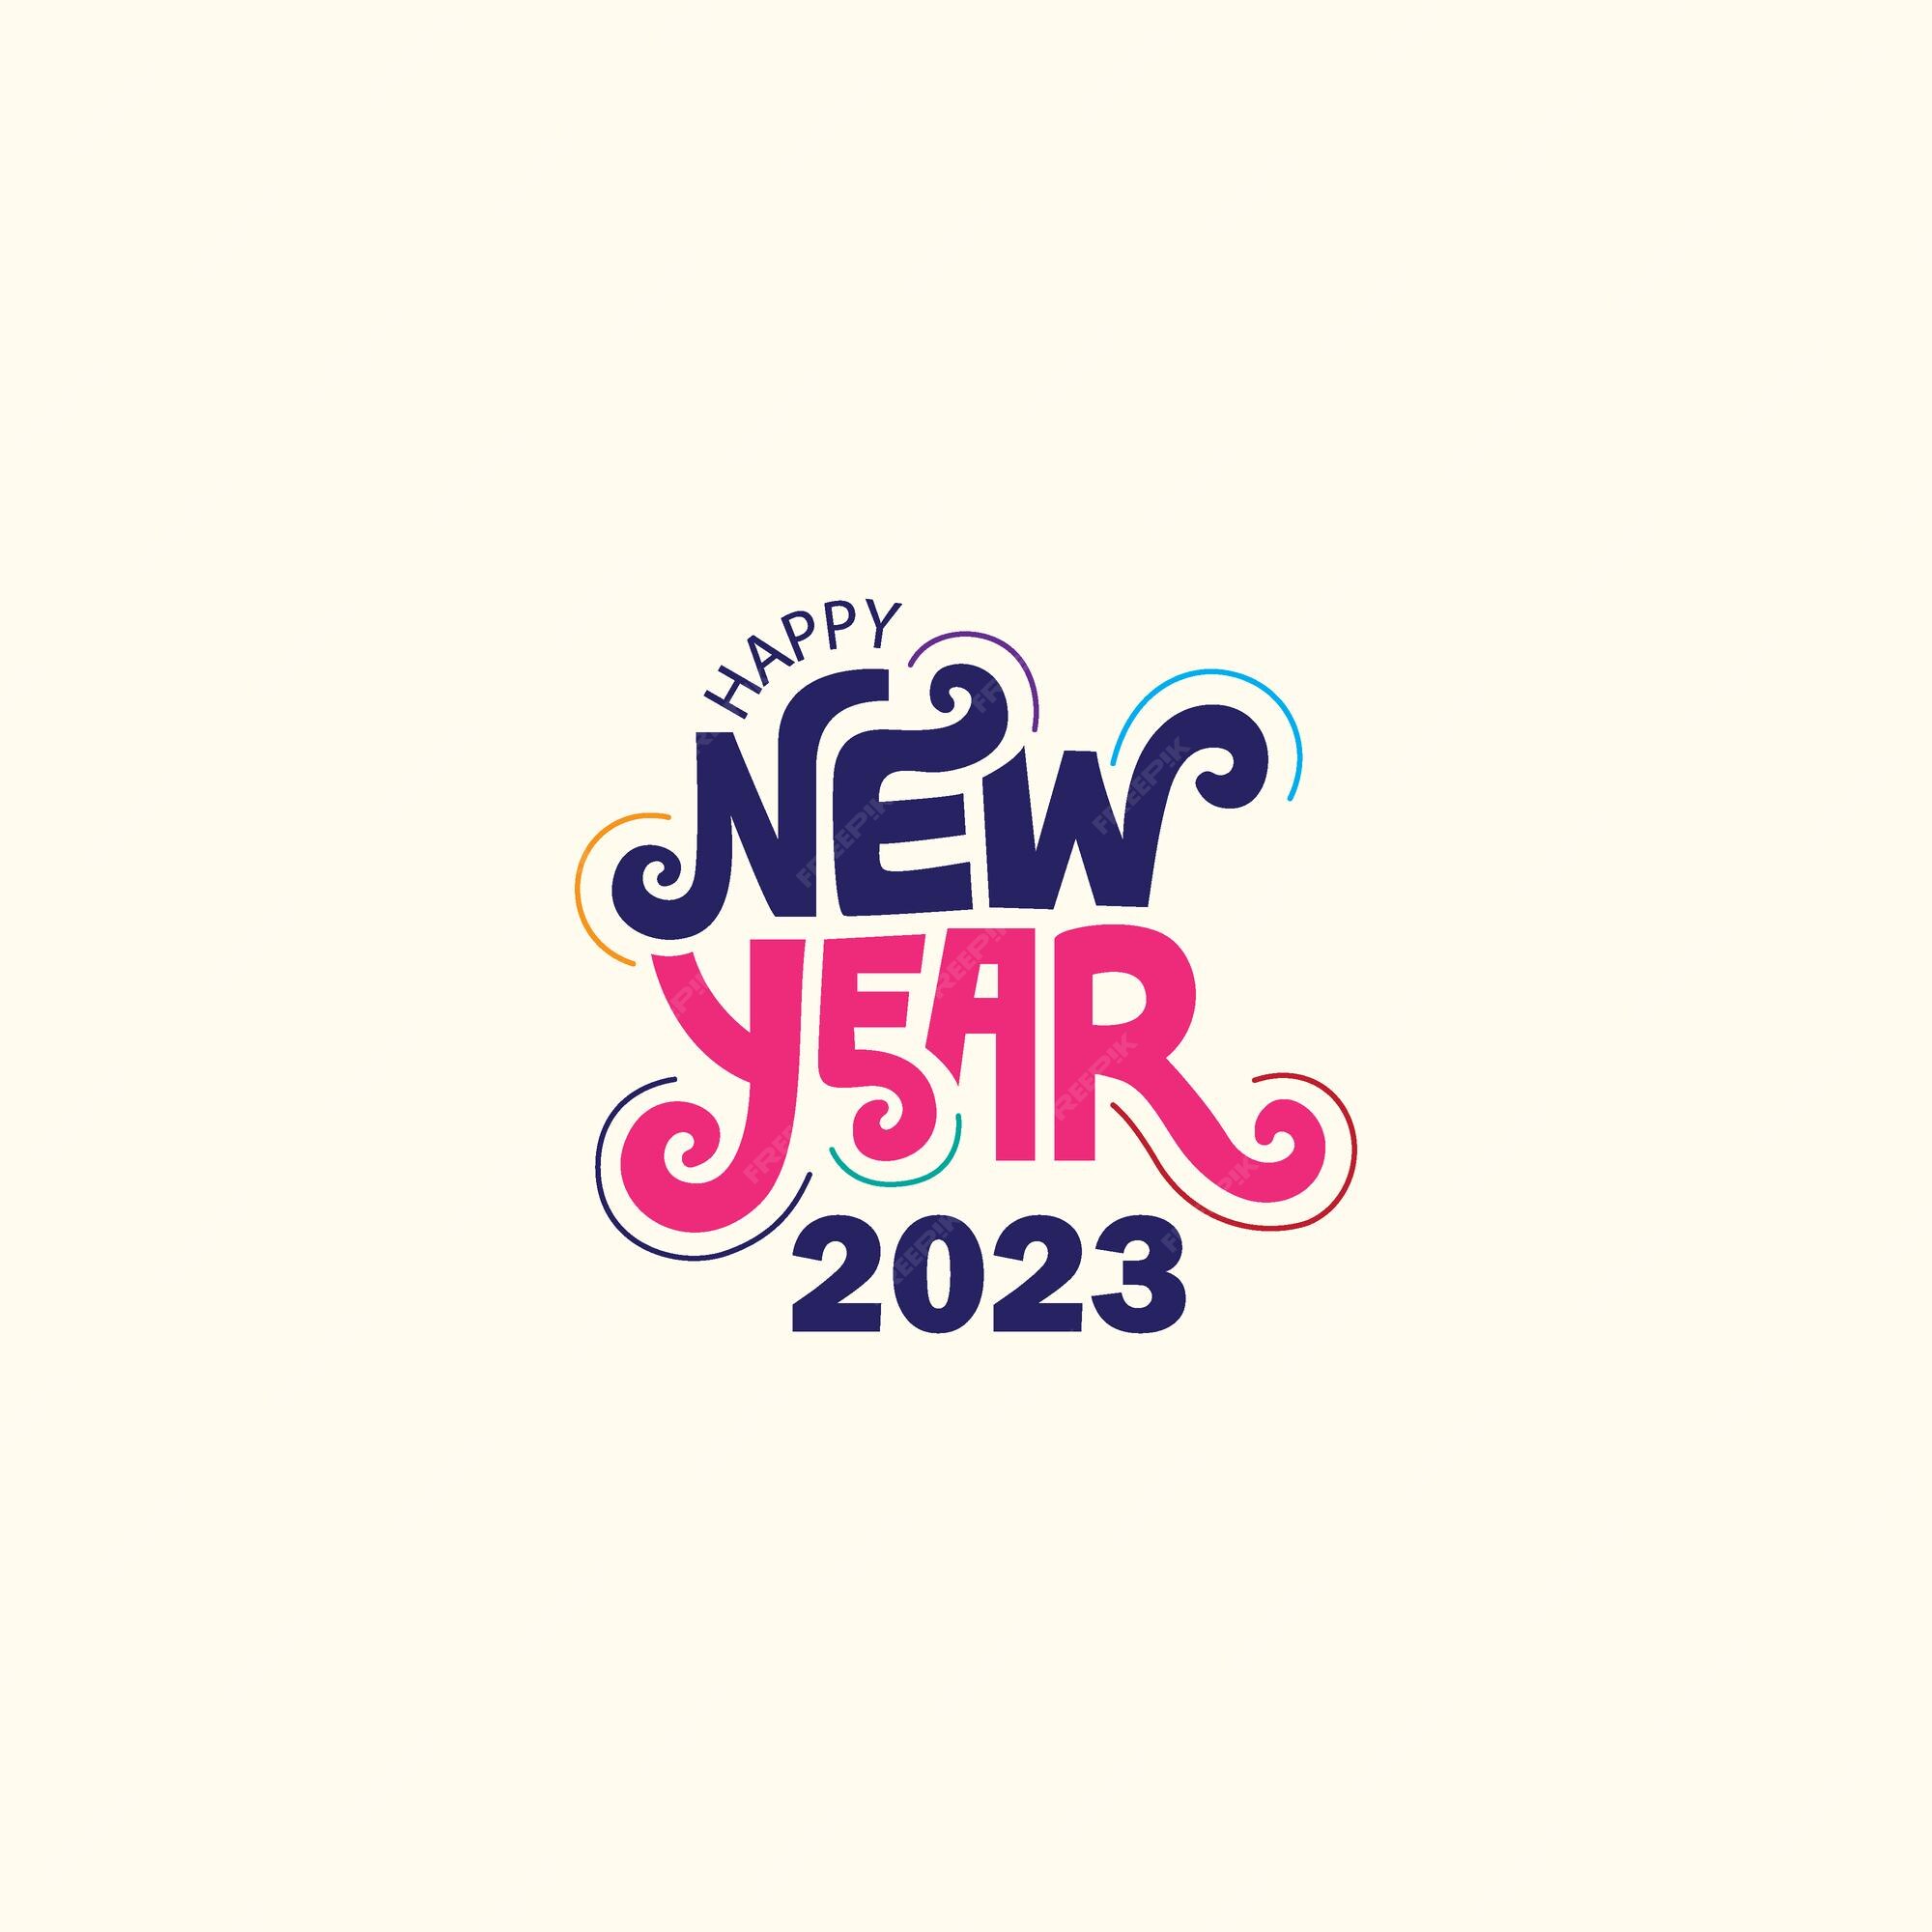 Happy new year 2023 greeting card holiday Vector Image